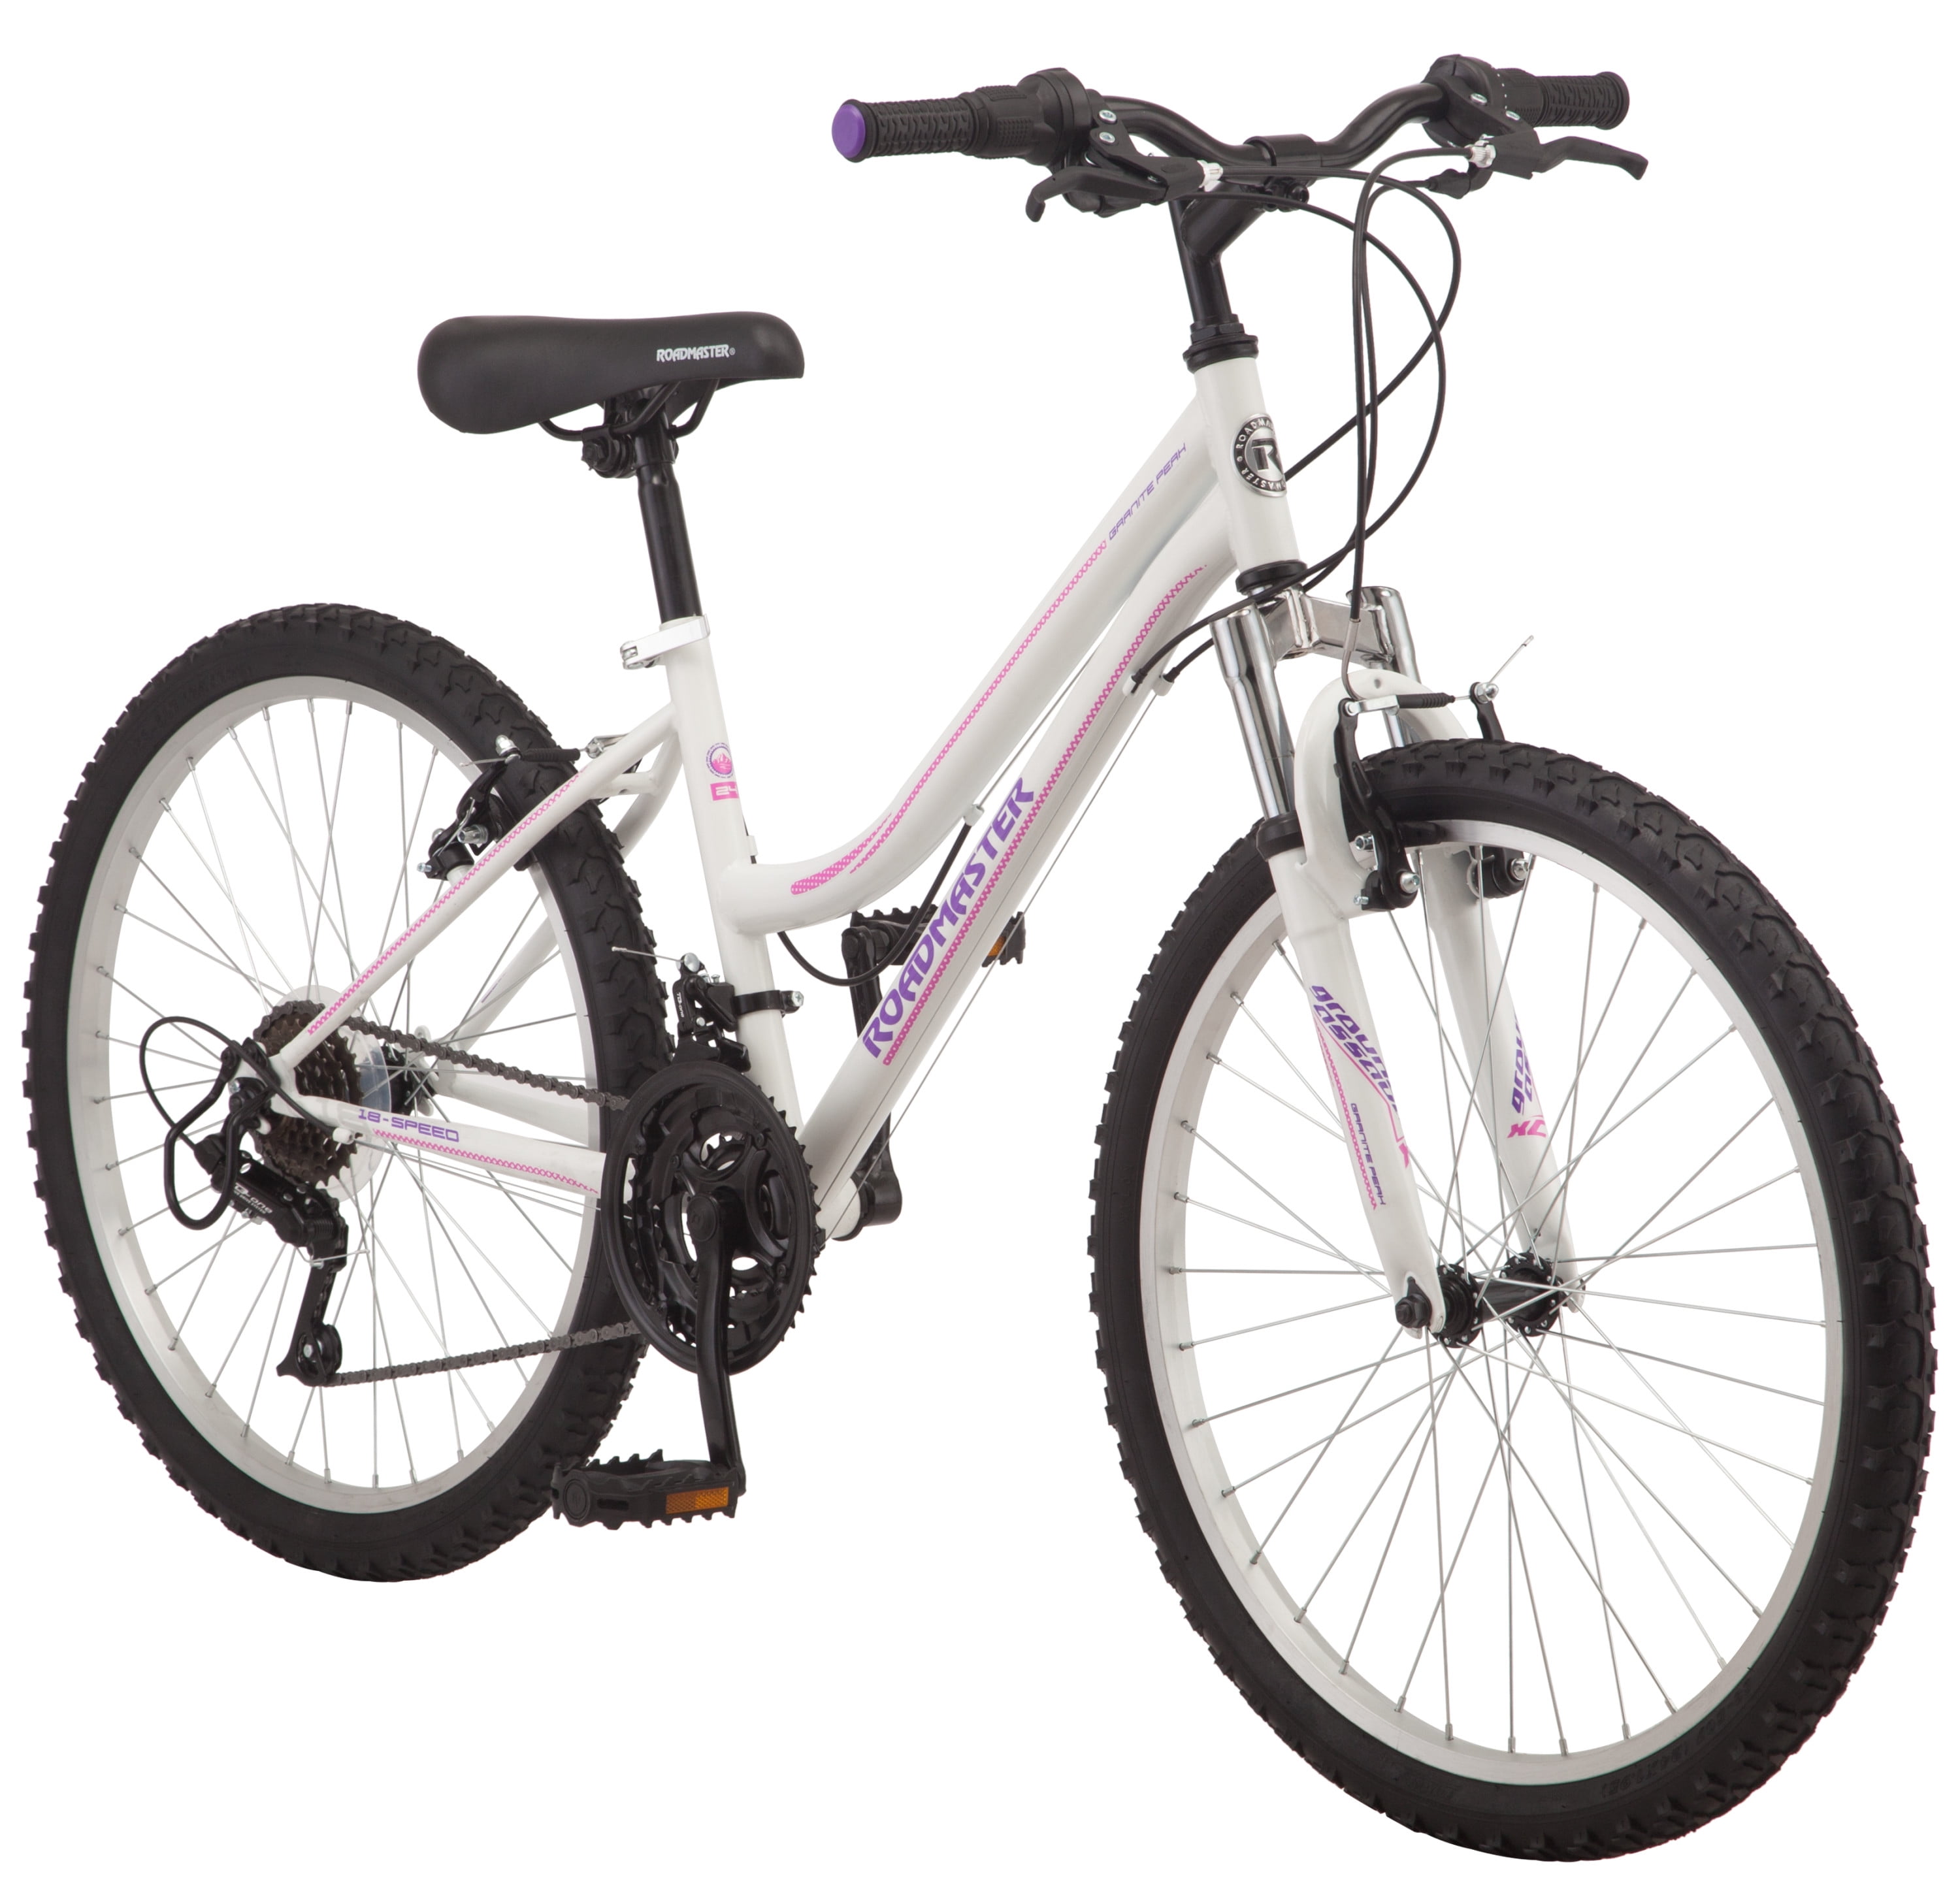 Mountain Bike 24" Roadmaster Granite Peak Purple Bicycle Cycling For Girls Women 